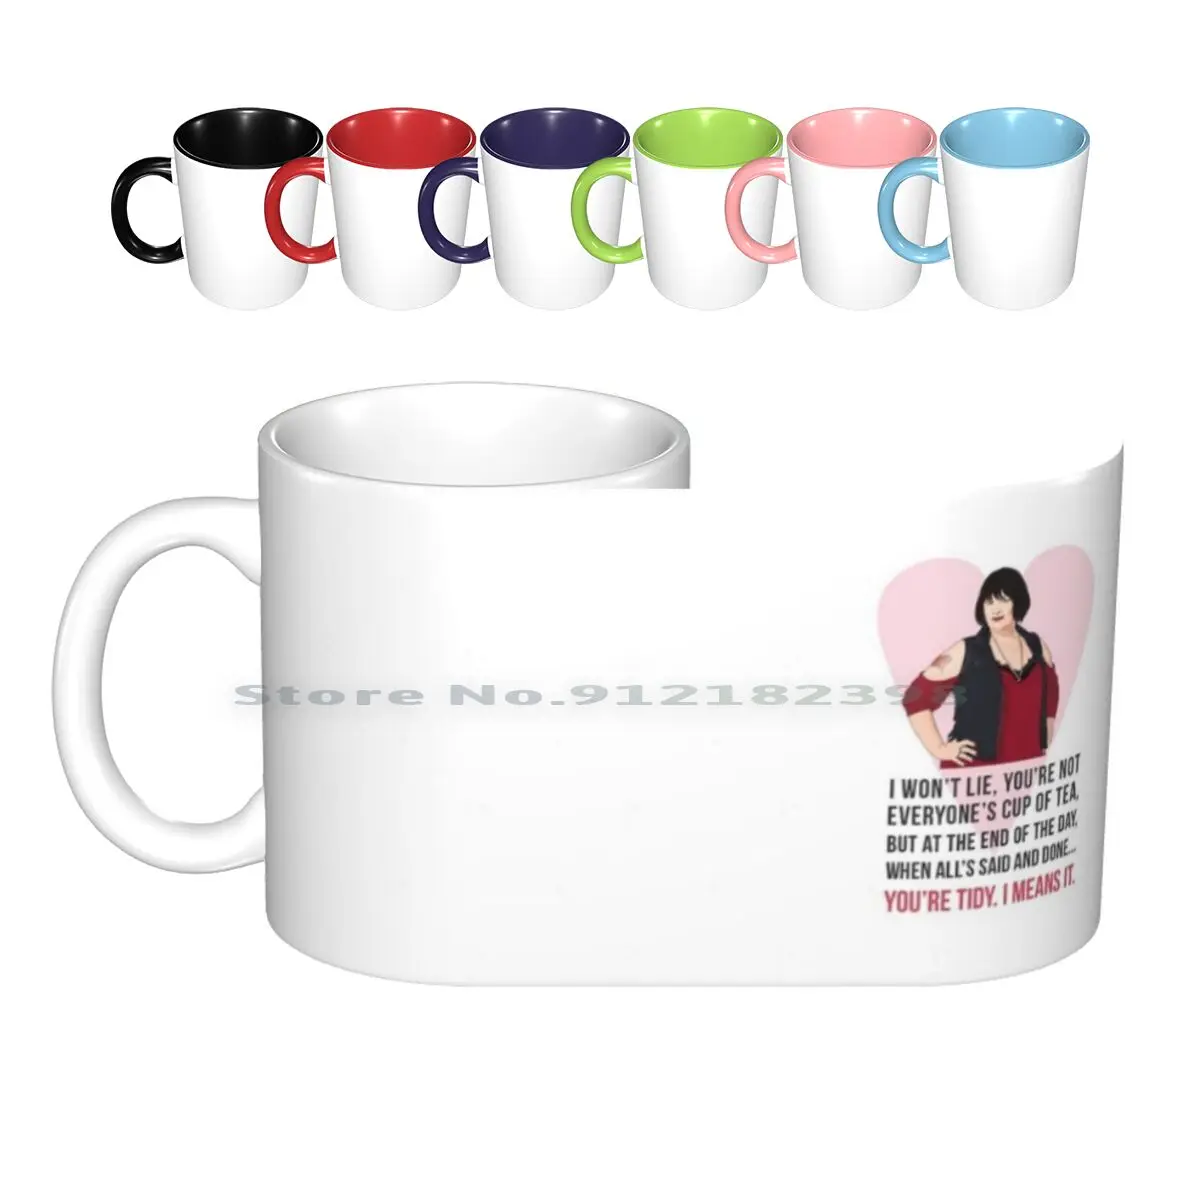 

You're Tidy , I Means It-Nessa-Gavin And Stacey Ceramic Mugs Coffee Cups Milk Tea Mug Nessa Gavin And Stacey Gavin Stacey Tidy